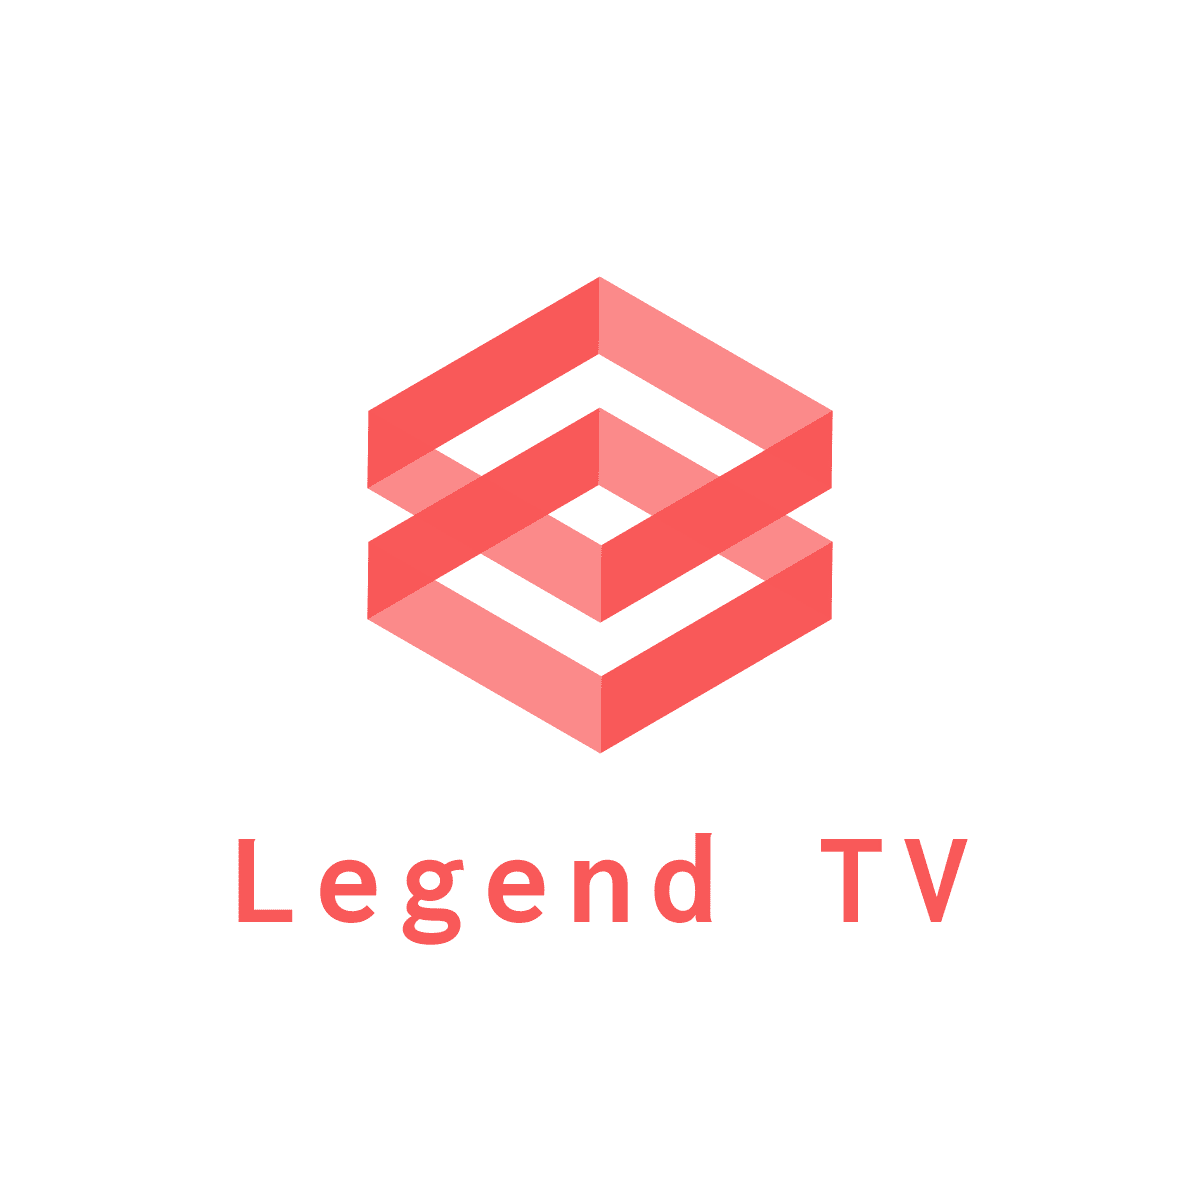 Legend TV